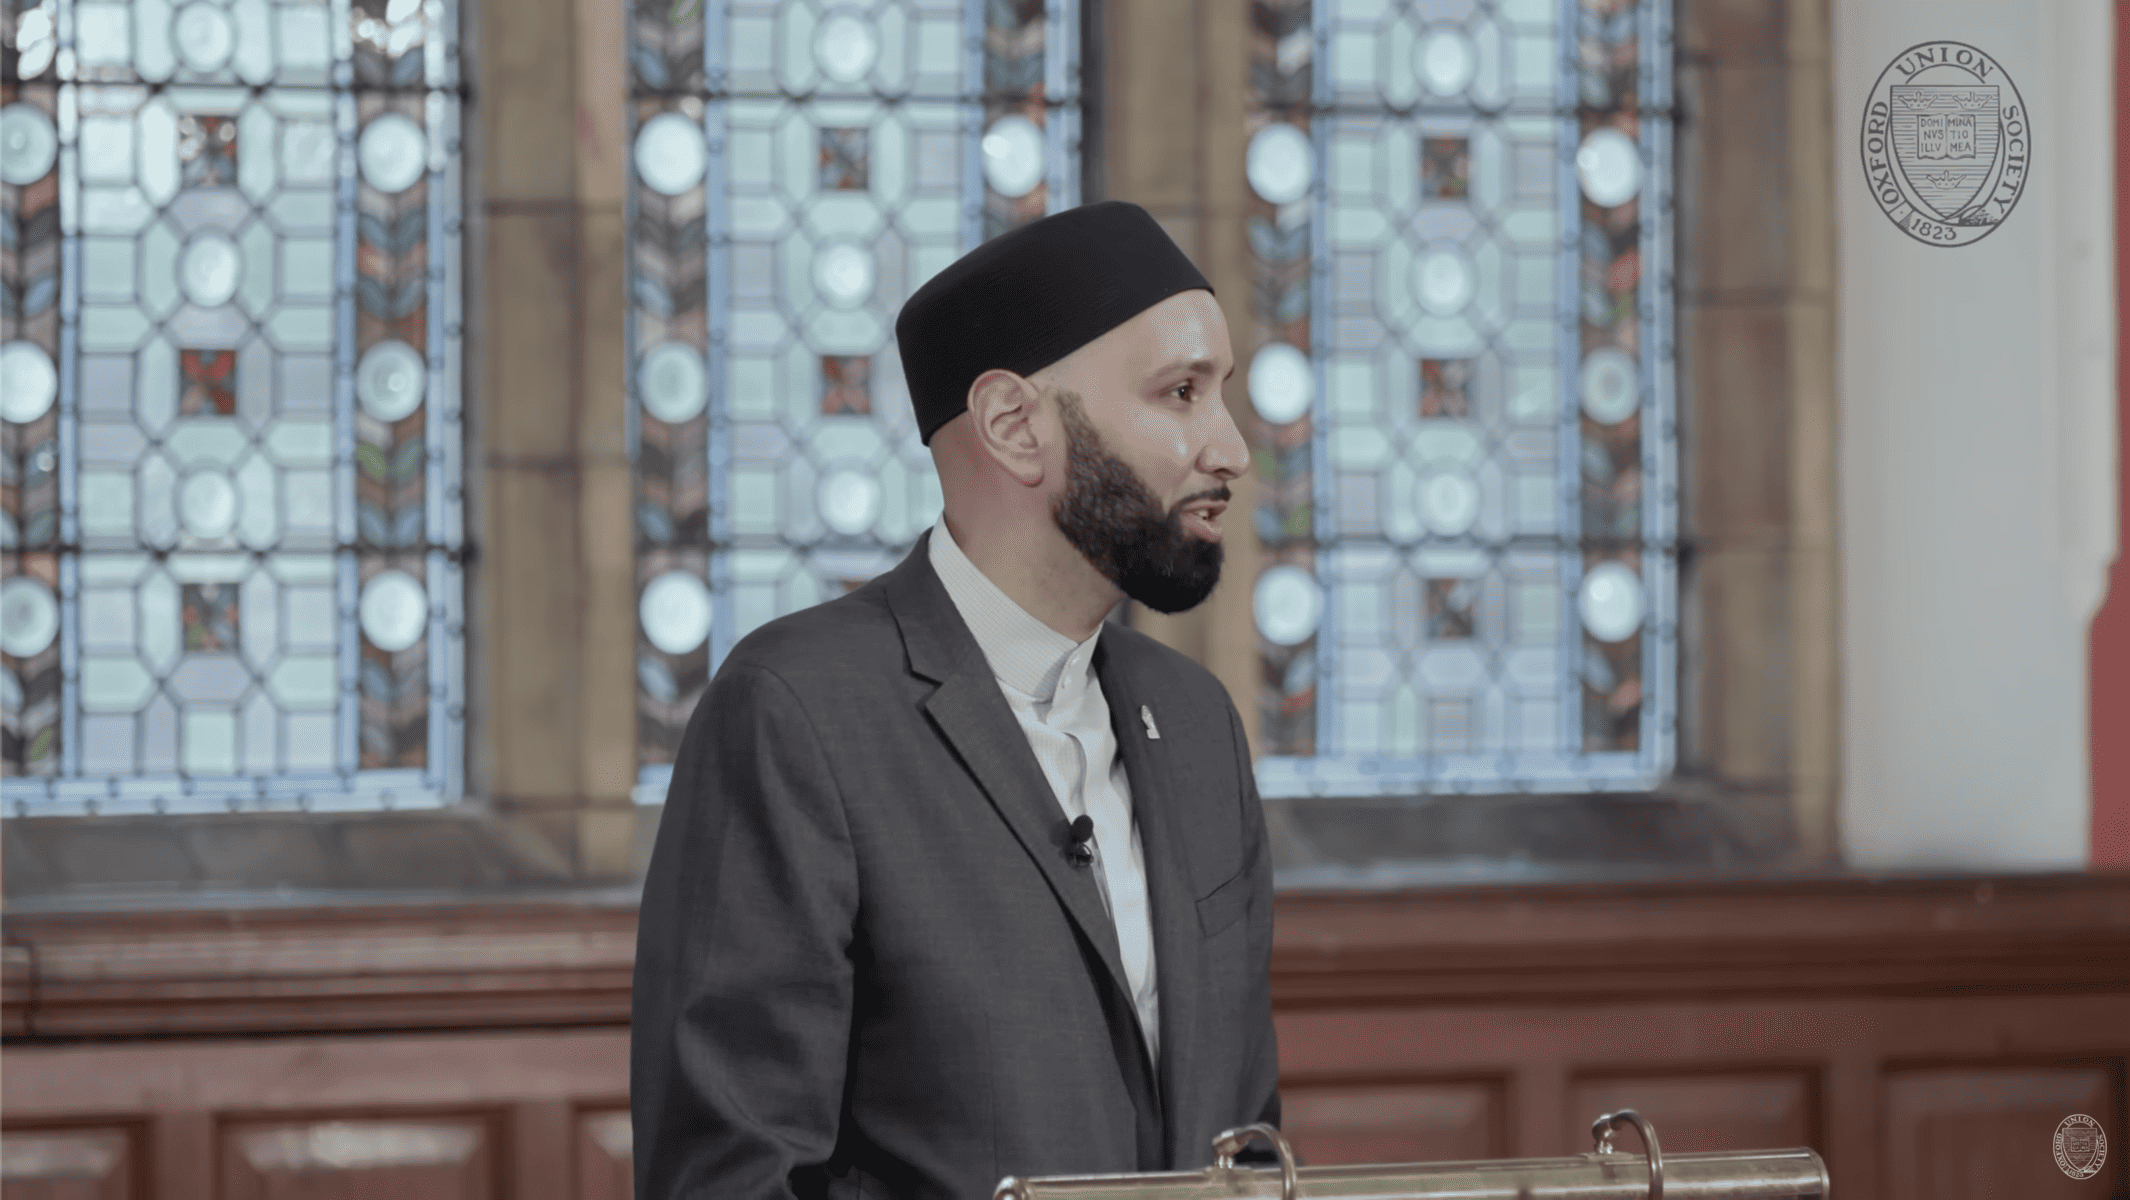 Omar Suleiman – Oxford Union Address: “Islam is a test, not a threat.”